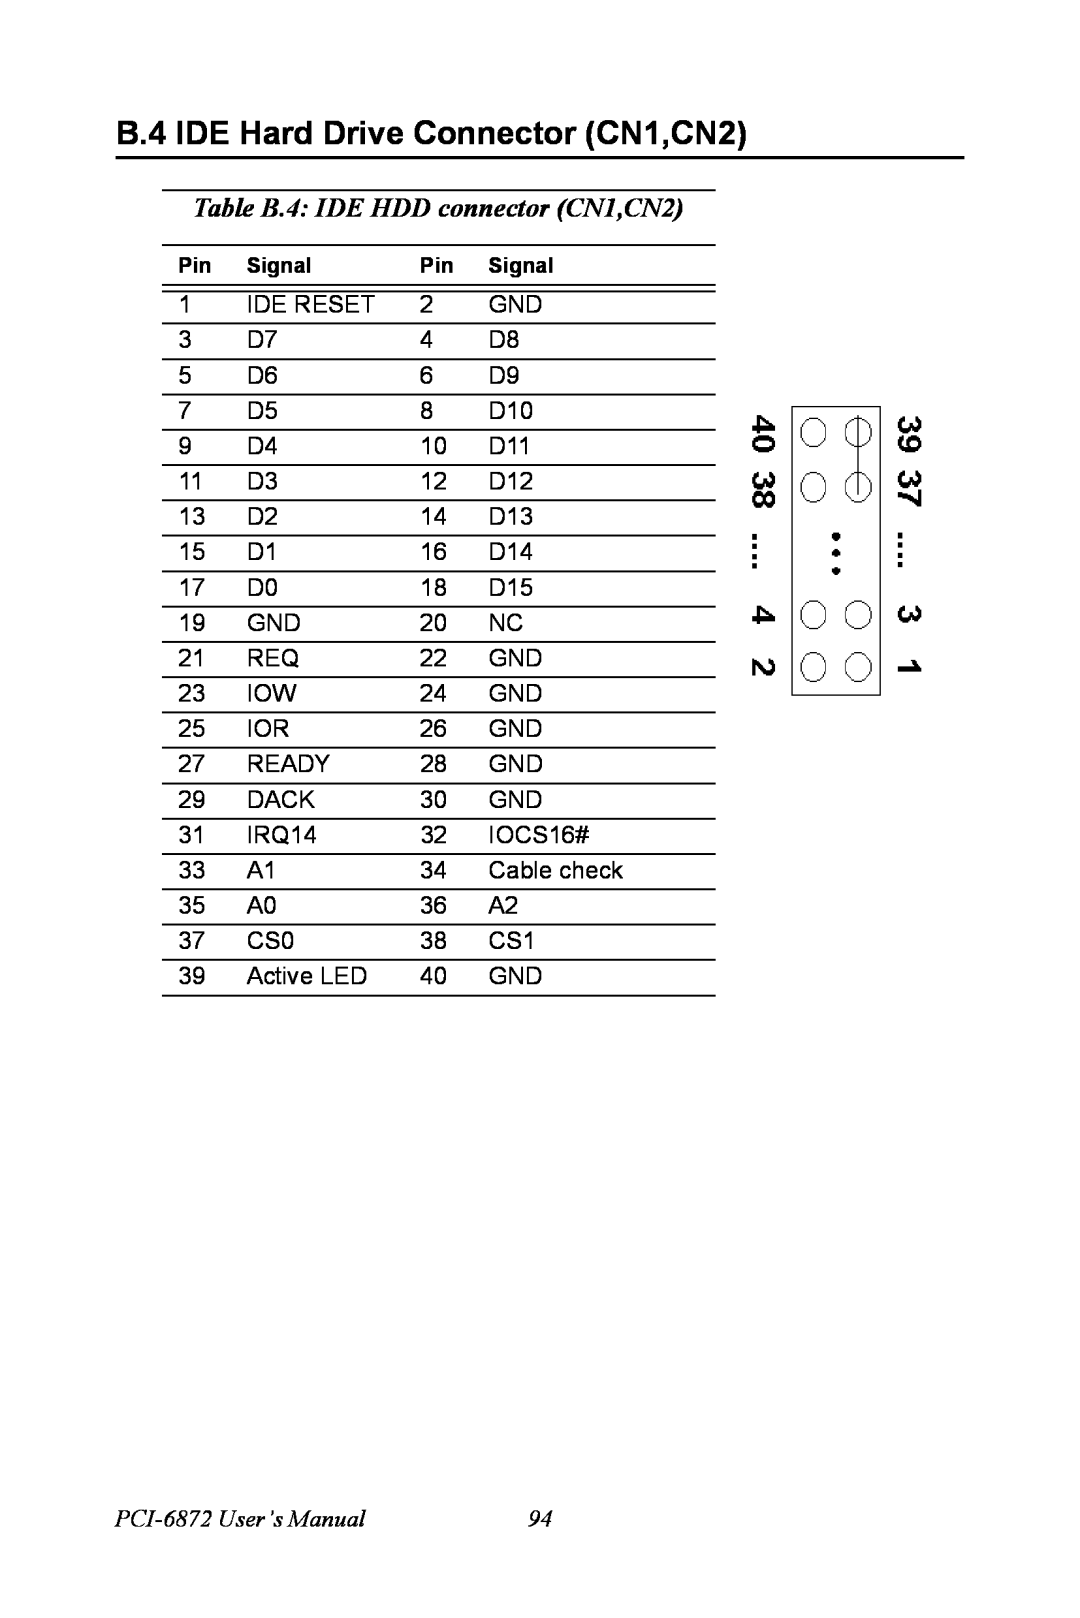 Advantech user manual B.4 IDE Hard Drive Connector CN1,CN2, Table B.4 IDE HDD connector CN1,CN2, PCI-6872 User’s Manual 